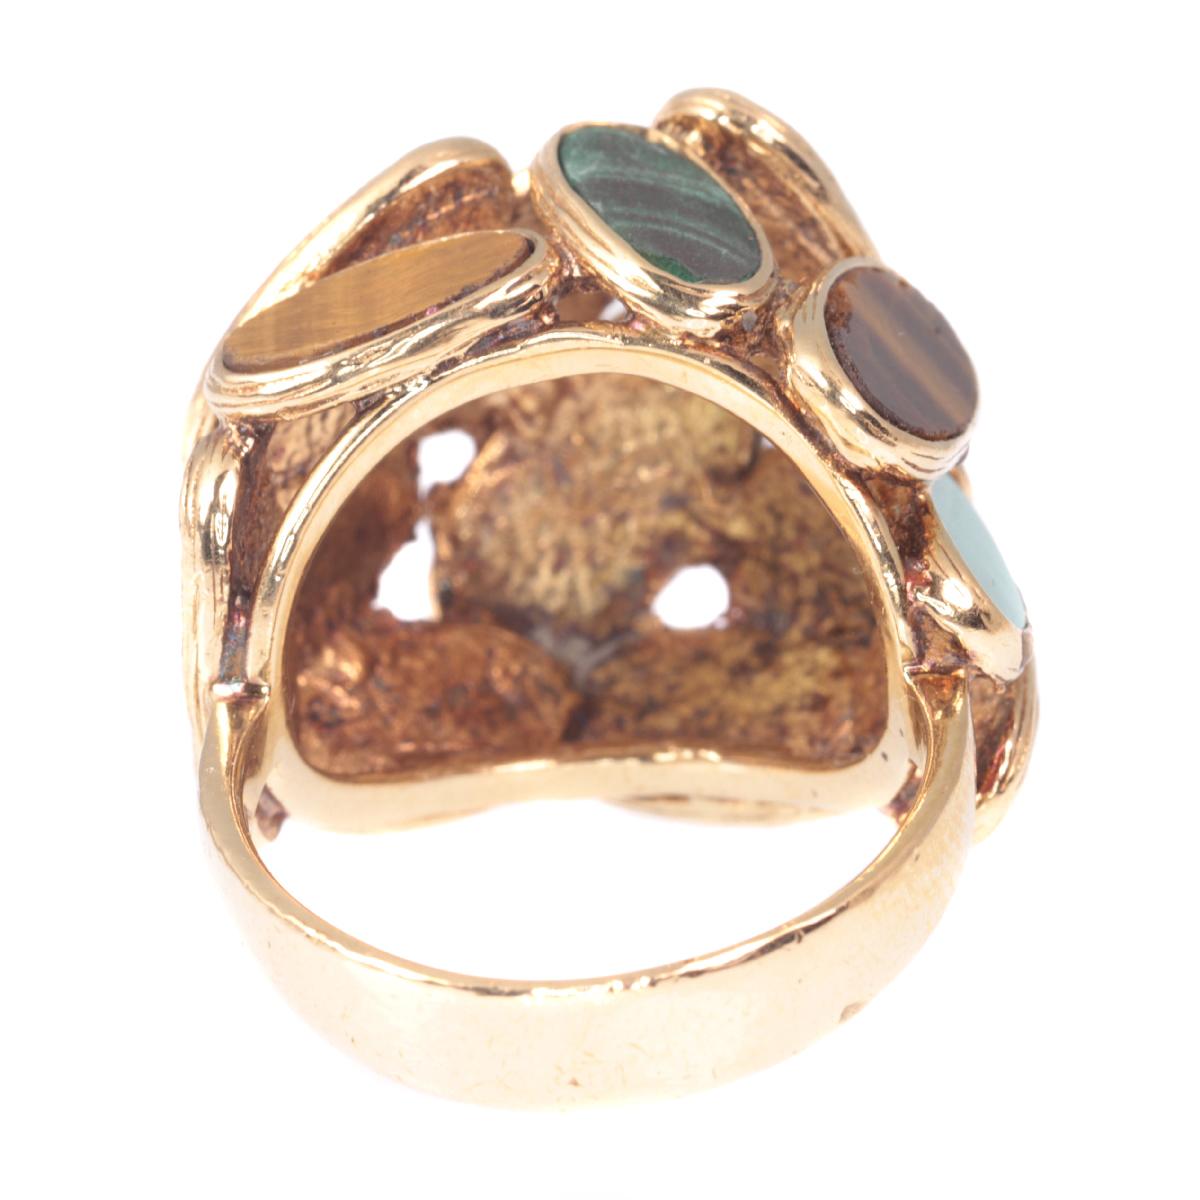 Vintage Pop-Art 18 Karat Gold Ring Set with Malachite and Tiger Eye, 1960s For Sale 5